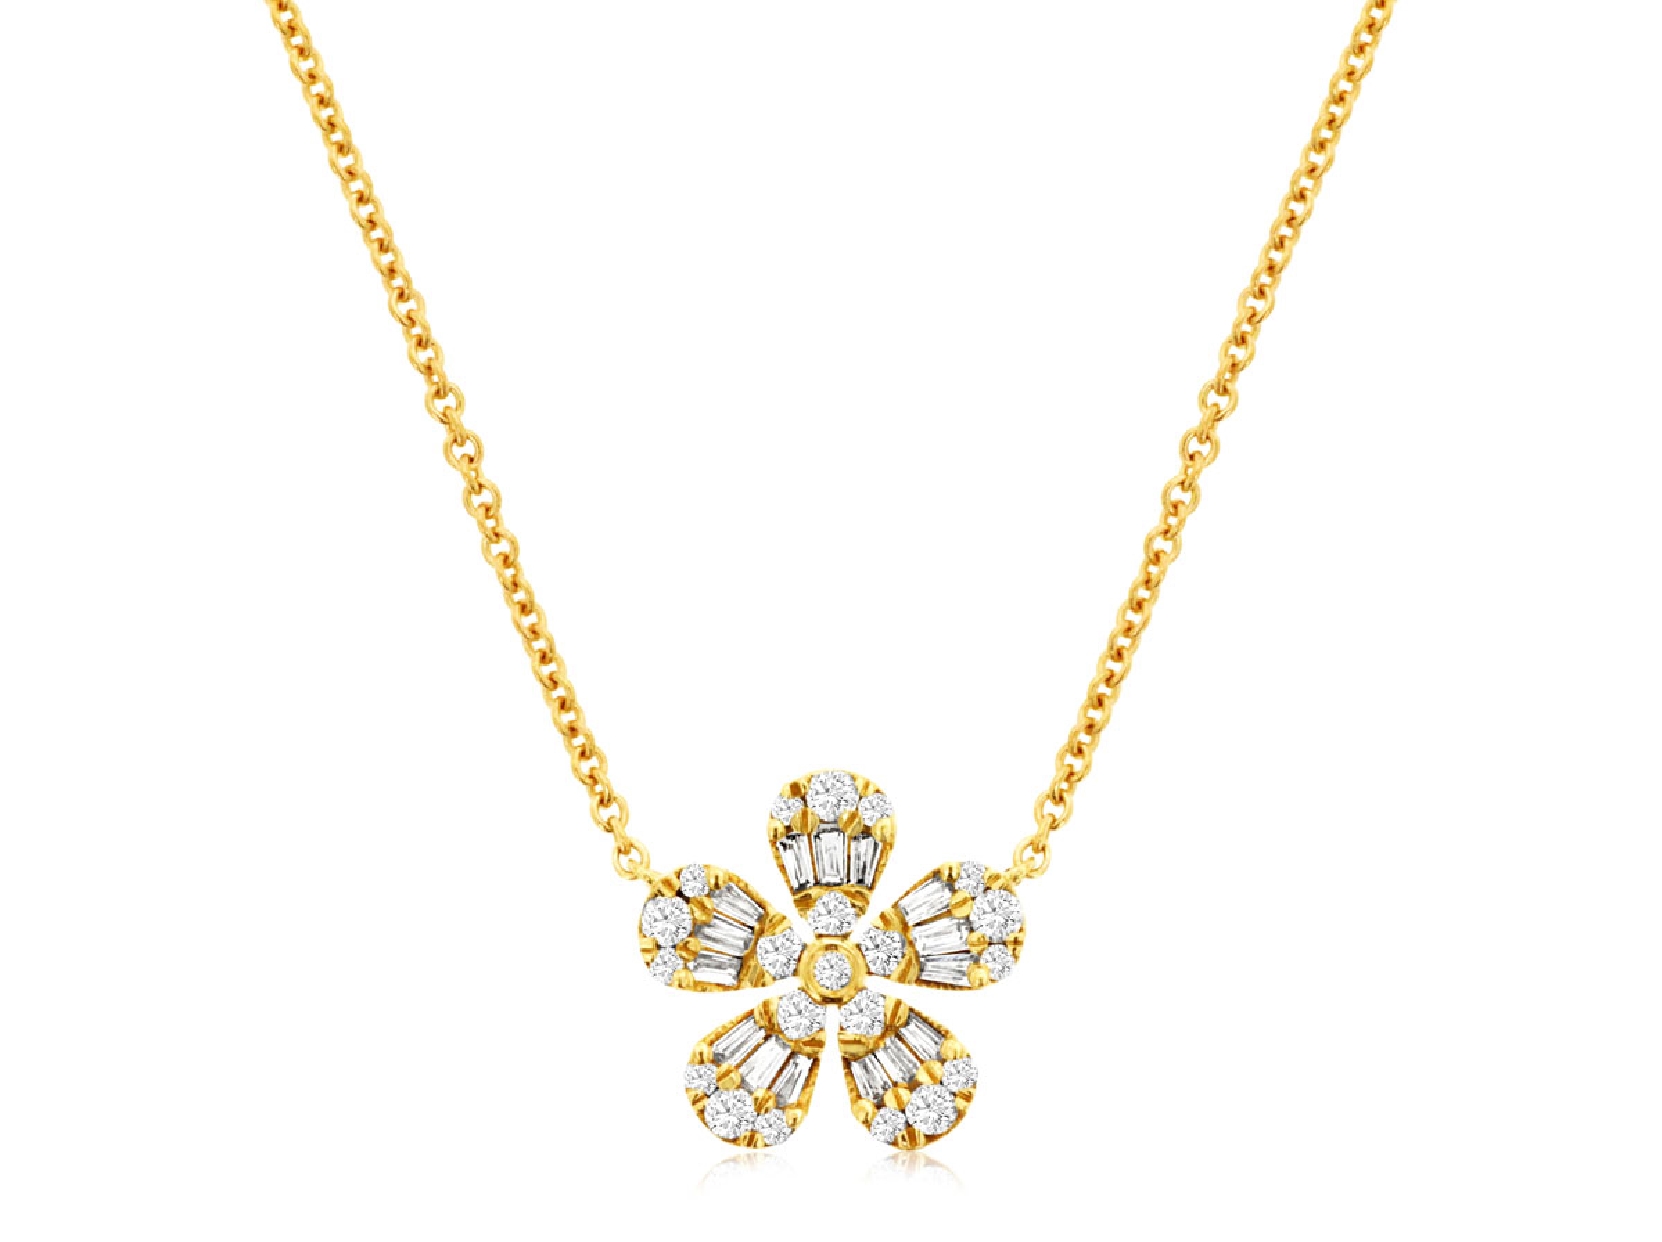 14K Yellow Gold Diamond Necklace with Flower Design

.28ct Diamonds
18  